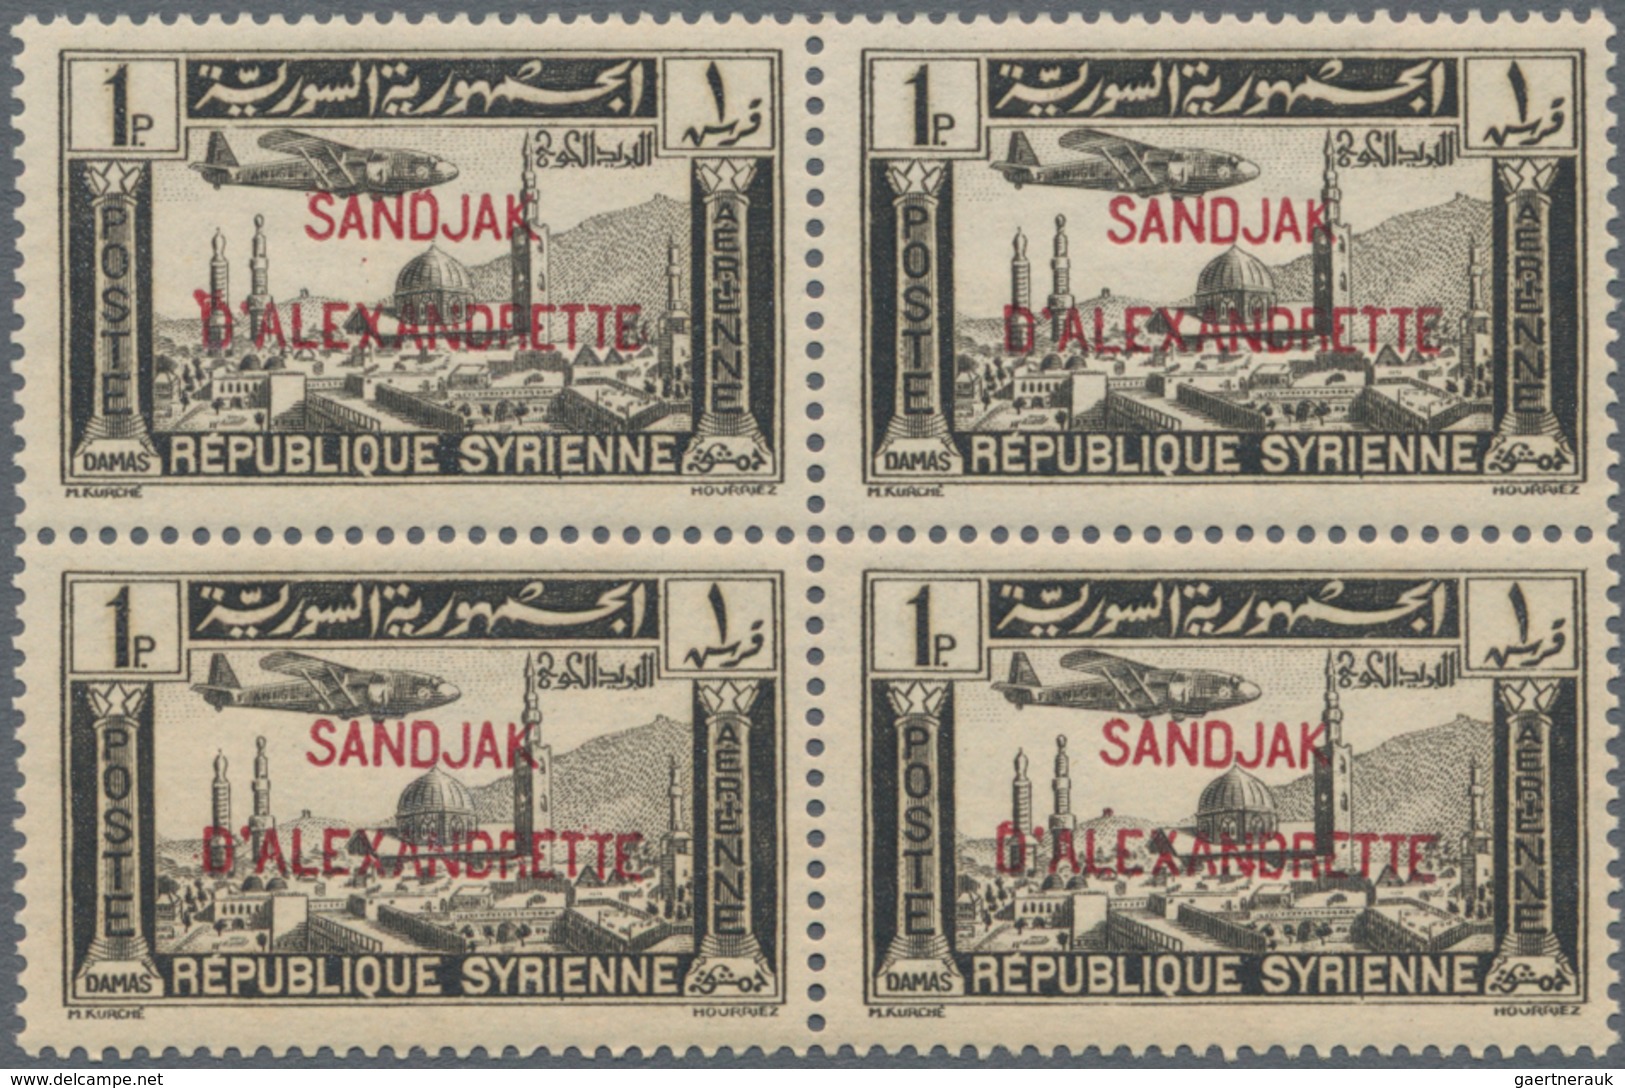 Türkei - Alexandrette: 1938, Syria airmail issue with red or black opt. ‚SANDJAK / D’ALEXANDRETTE‘ c